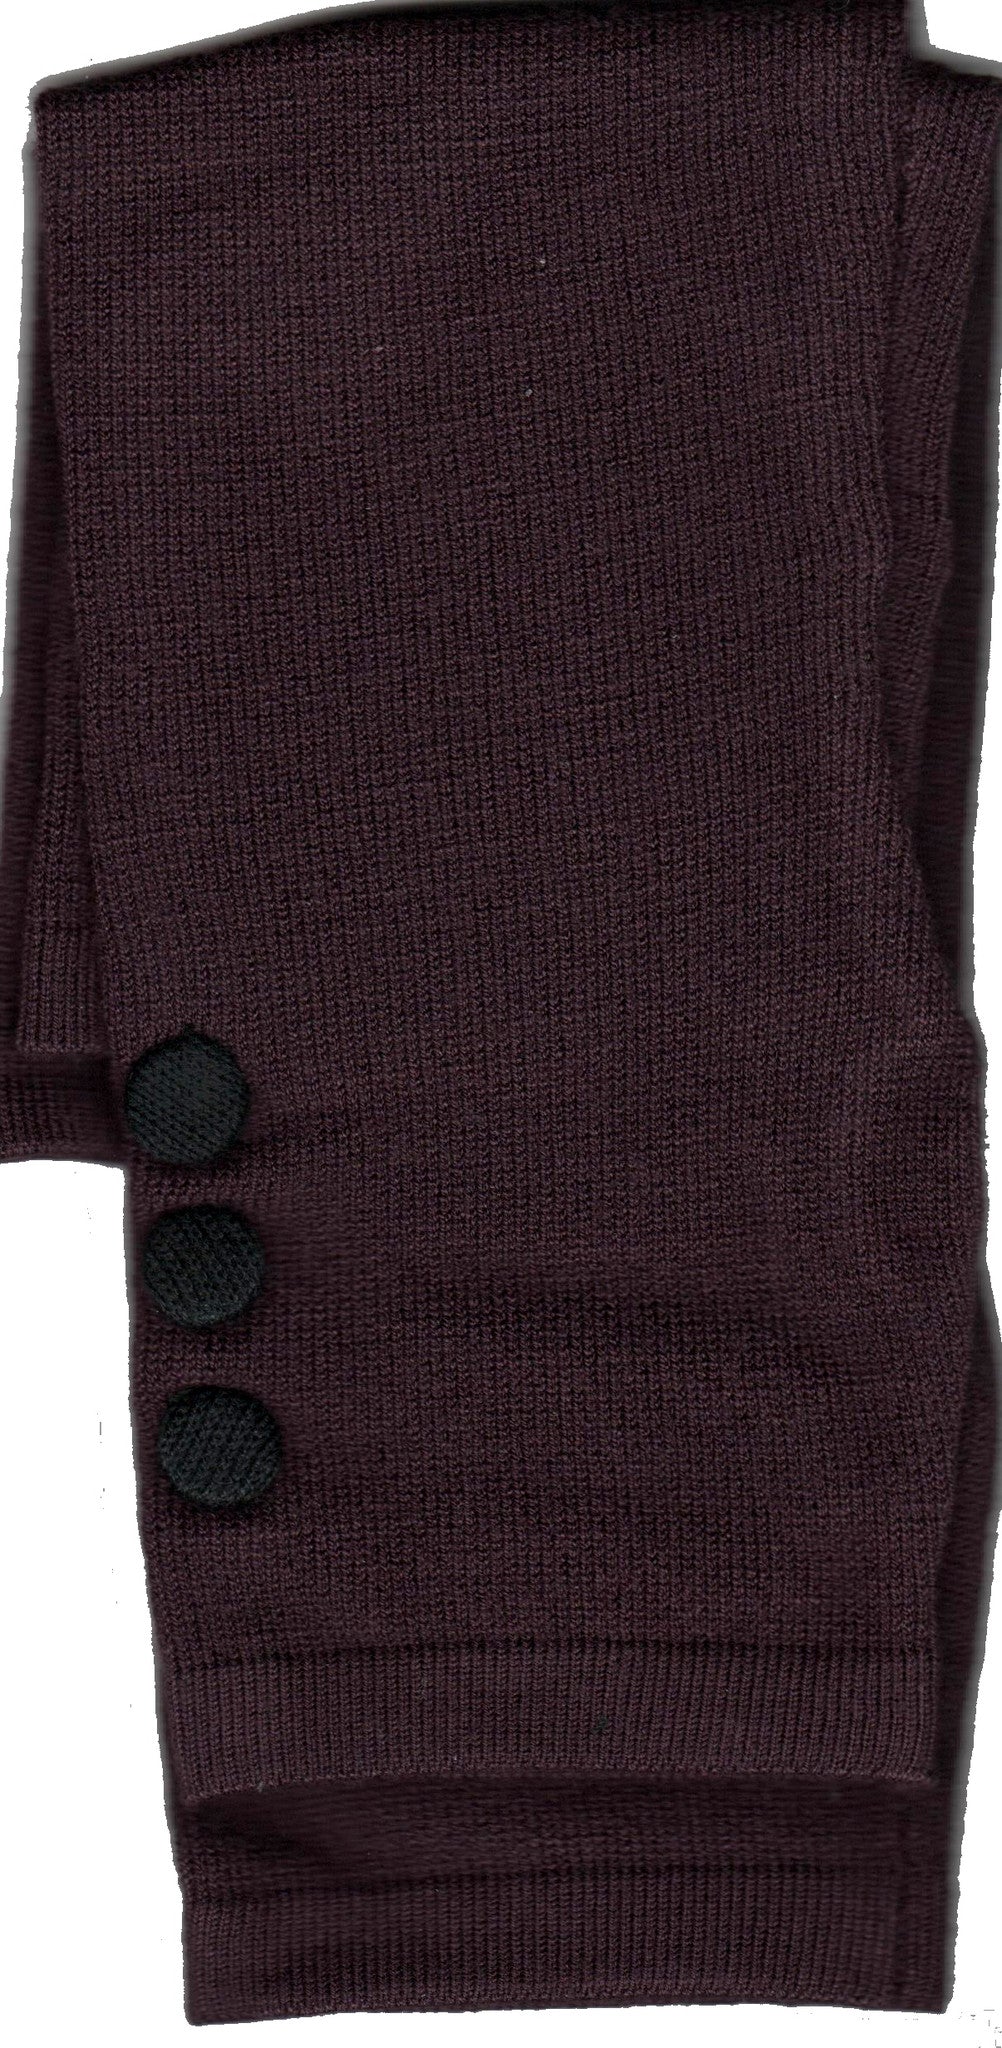 Zazou Button Fingerless Glove with Black Button Embellishment